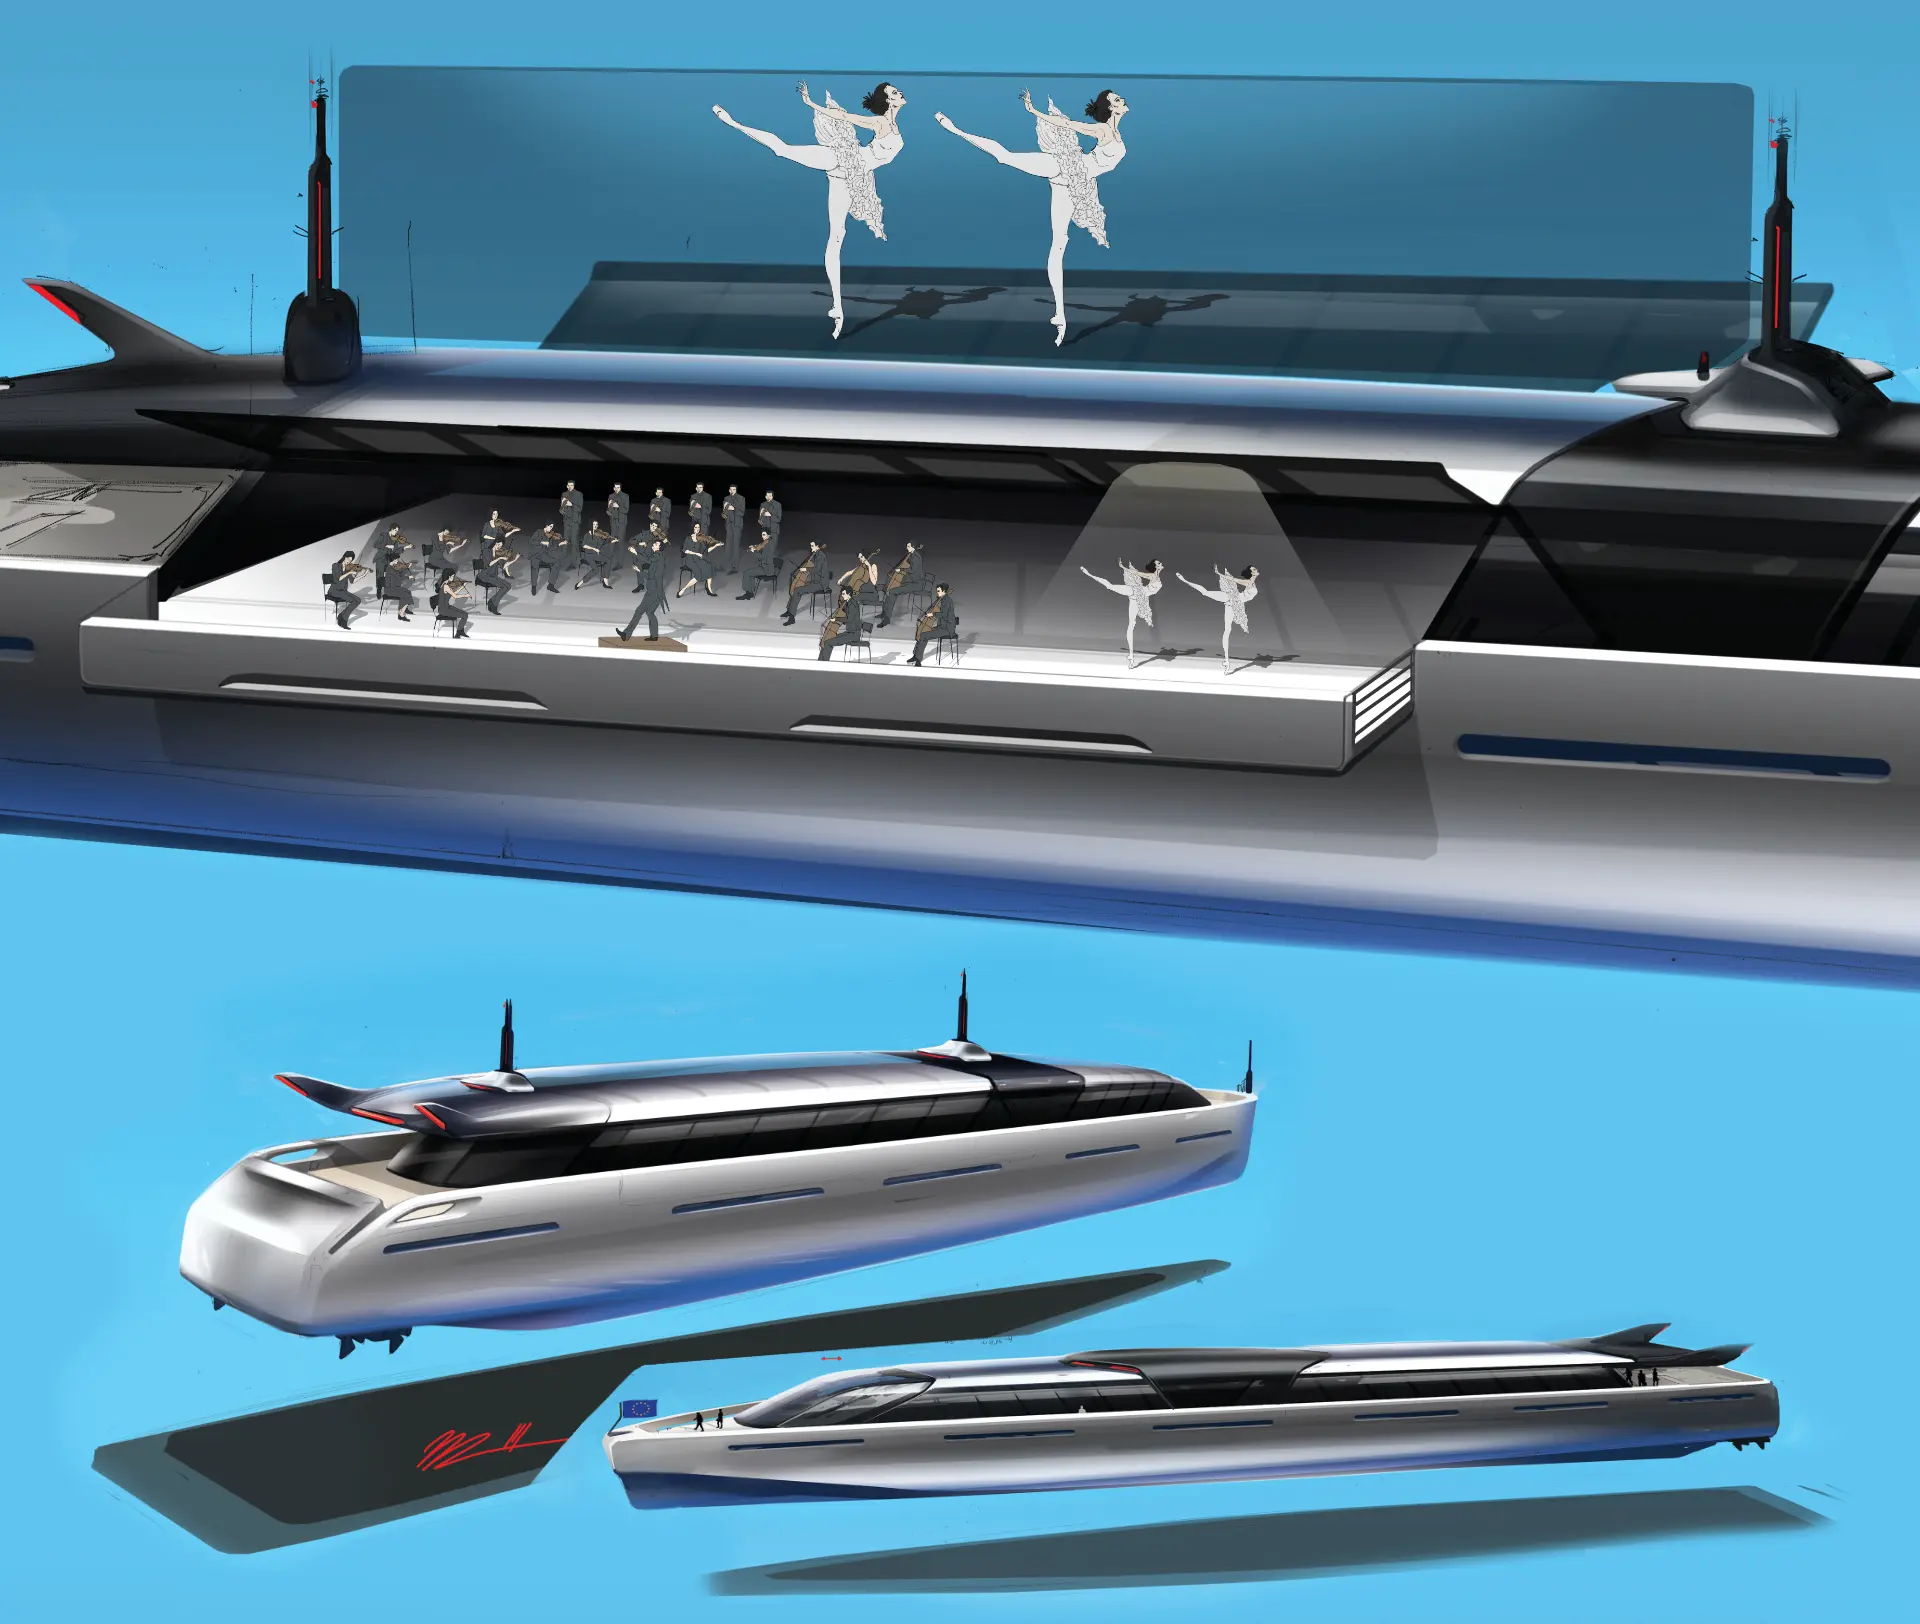 FDM River Boat concept sketches_Design by Werkemotion